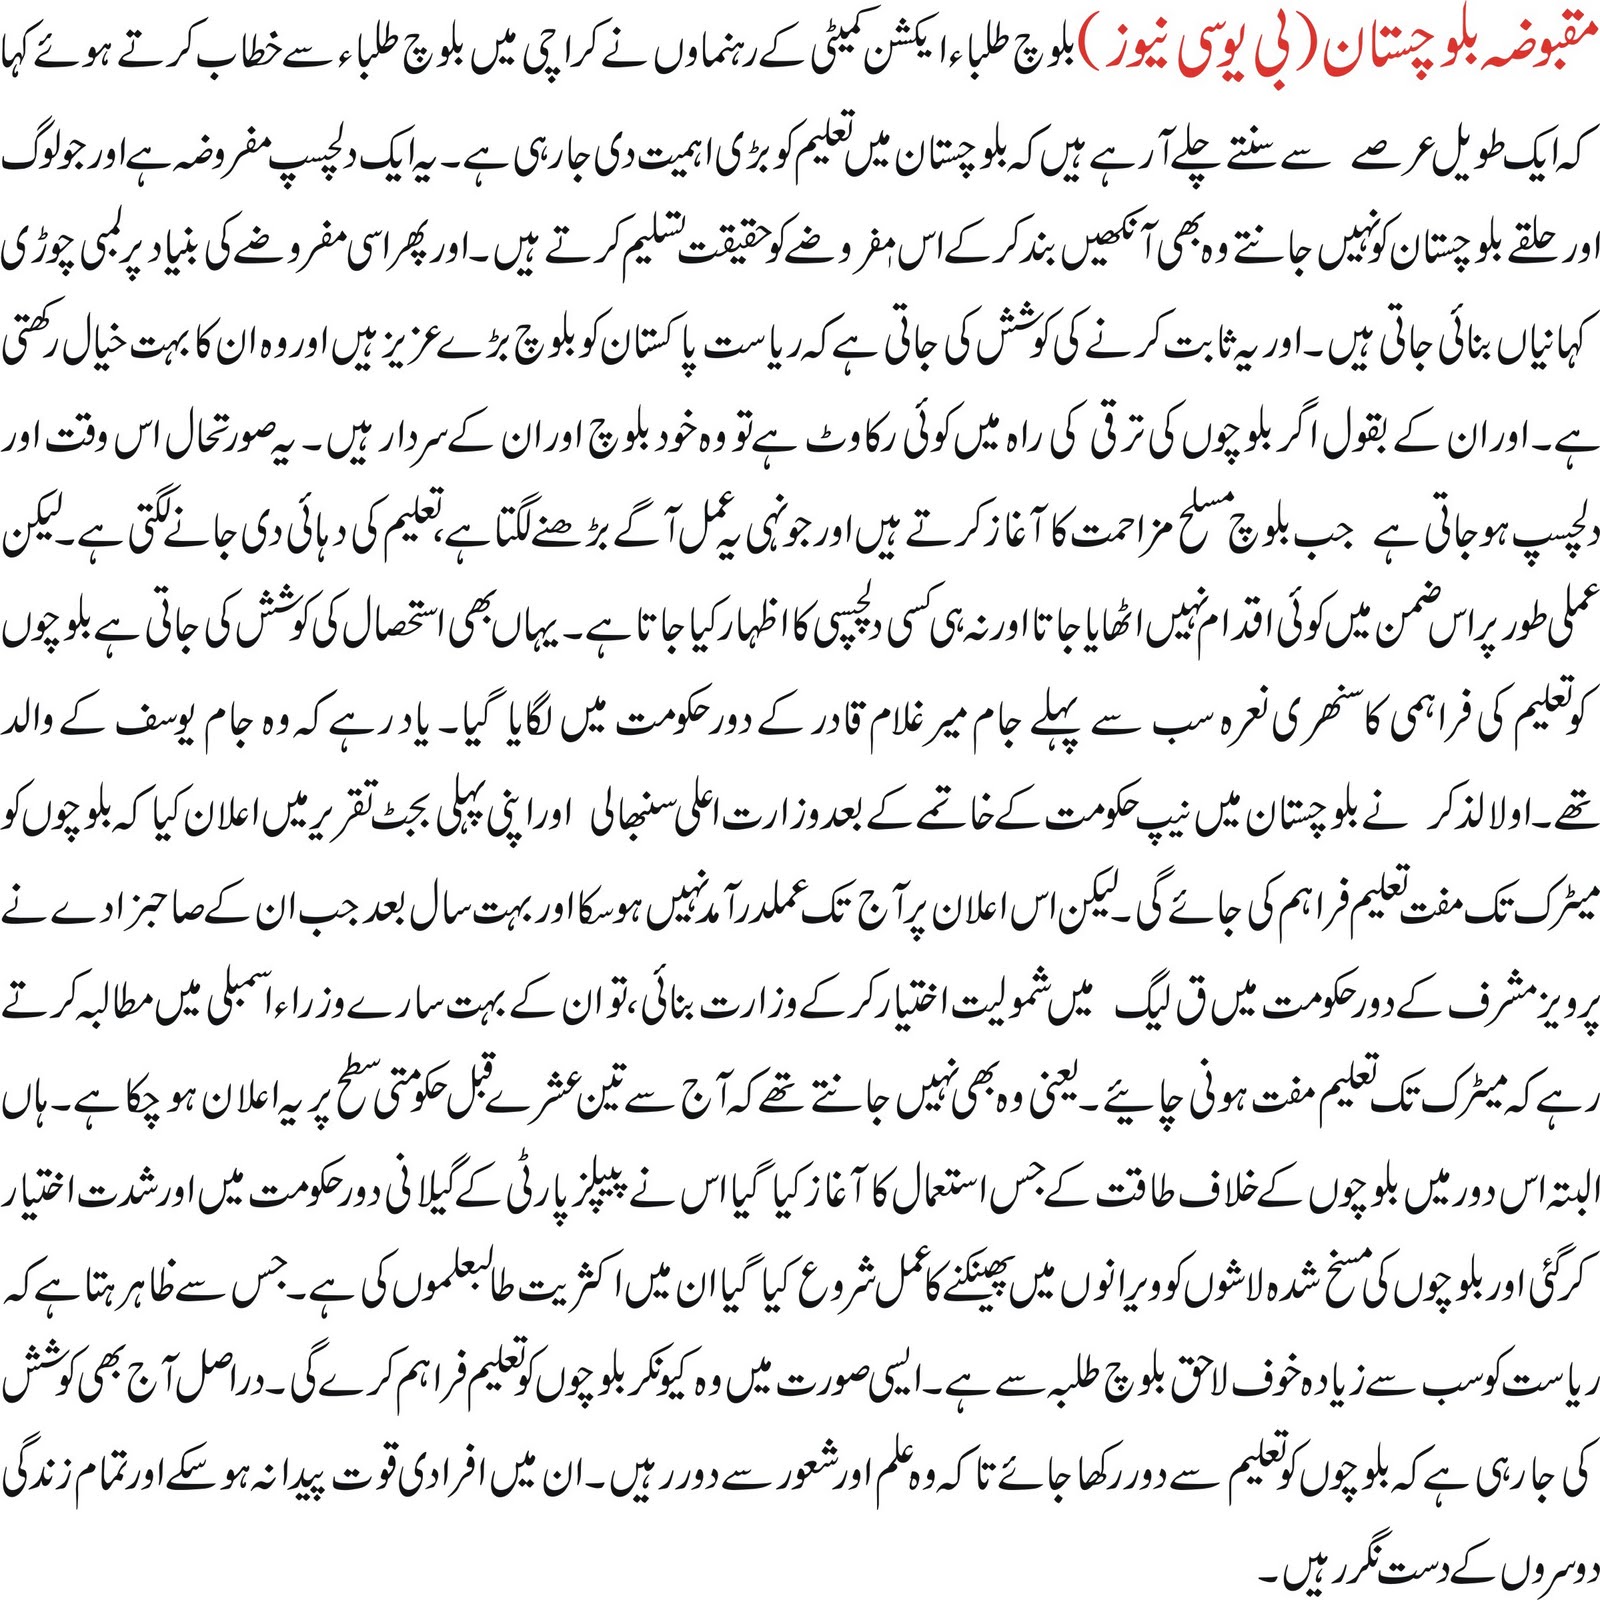 News Bbc Urdu